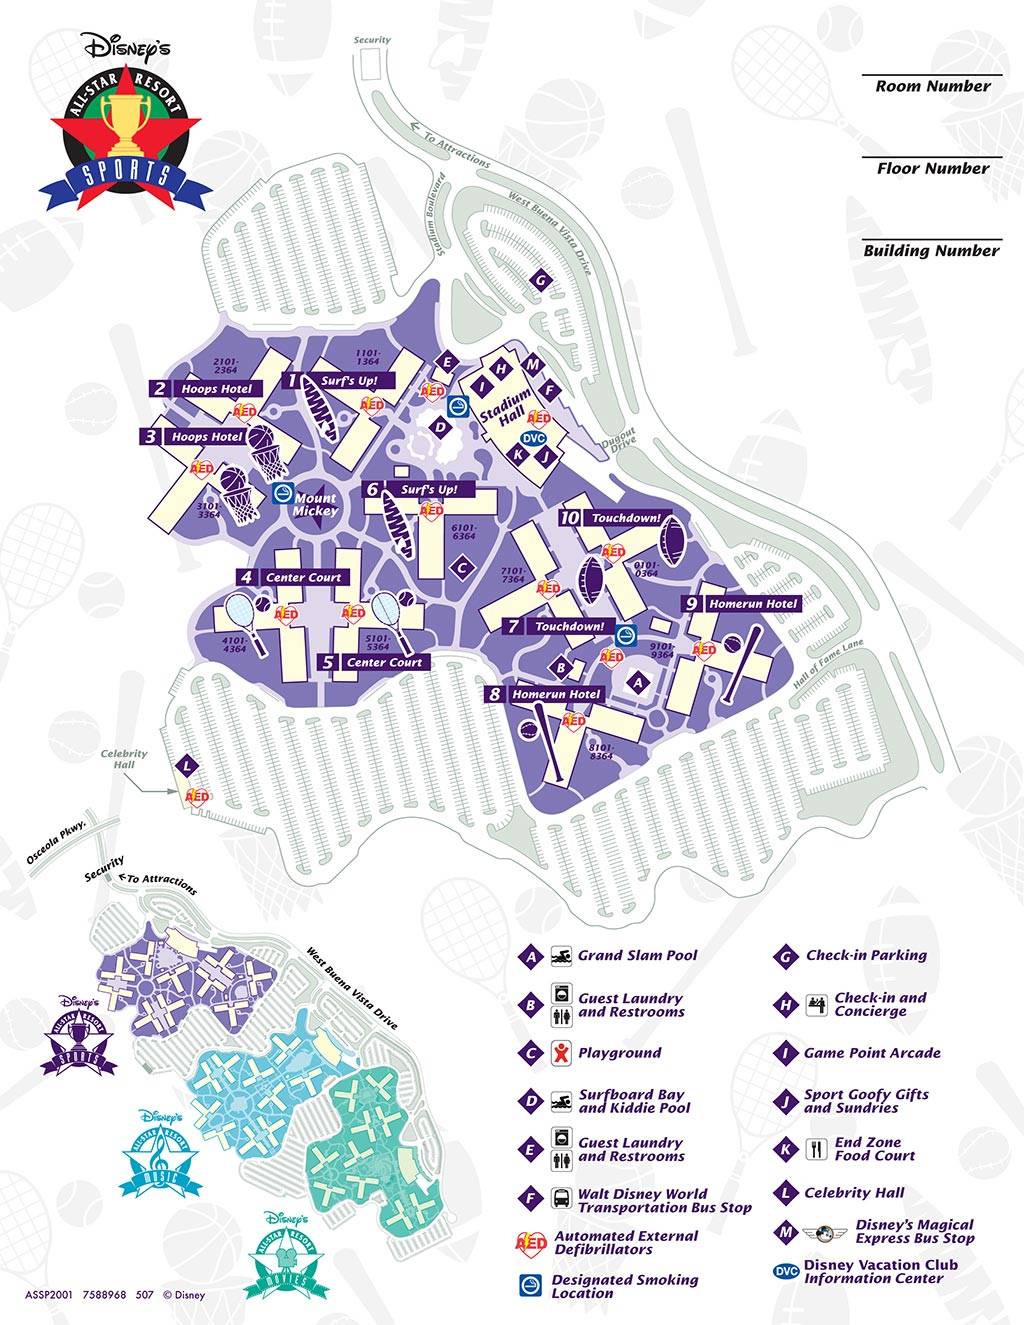 Disney's All-Star Sports Resort map